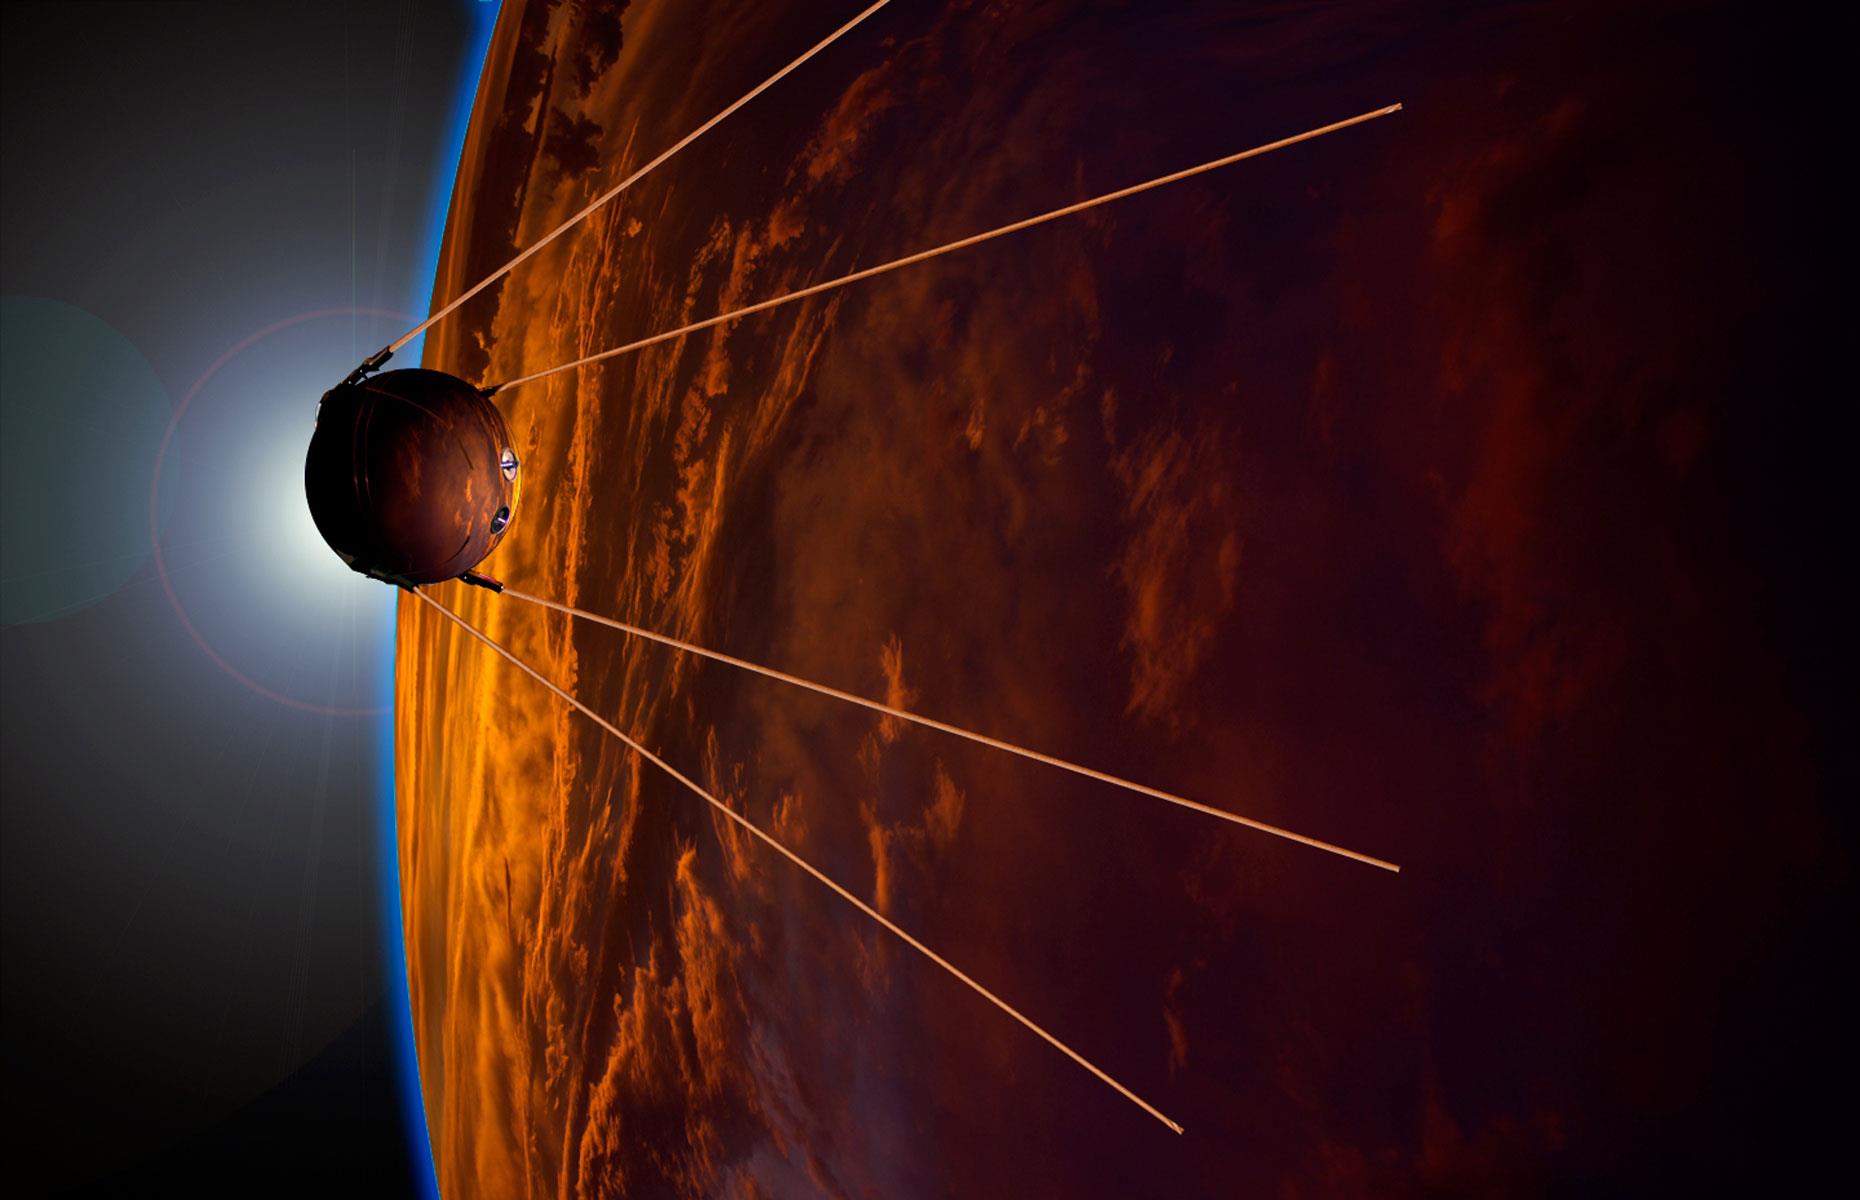 Sputnik 1: Earth's atmosphere 